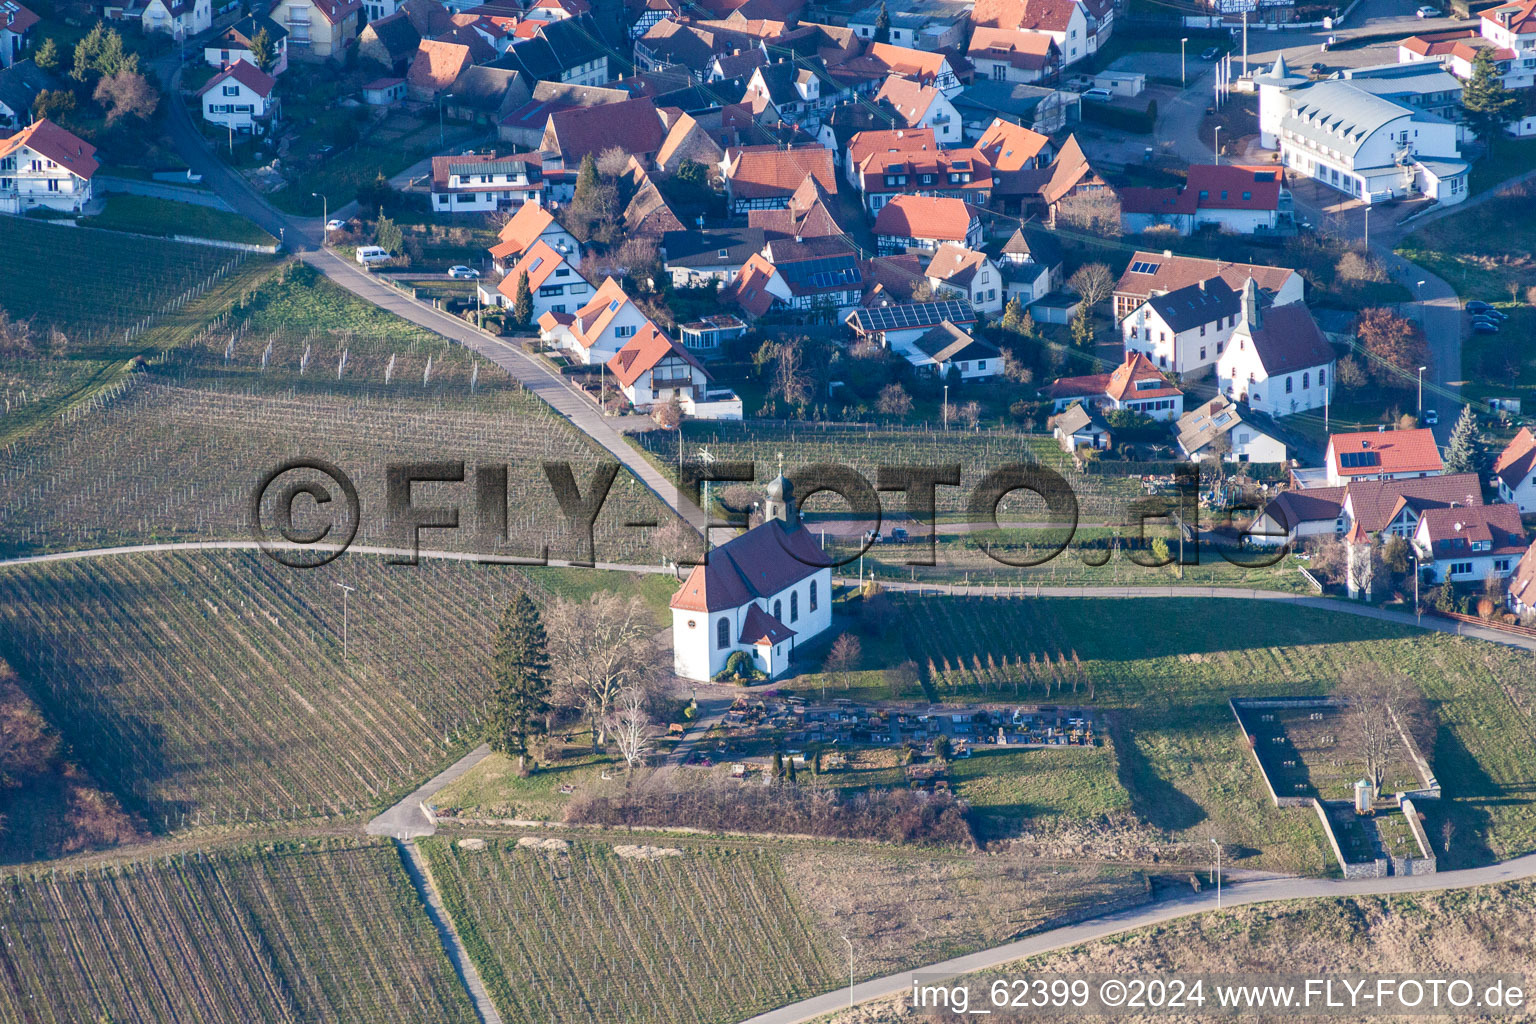 Drone recording of District Gleiszellen in Gleiszellen-Gleishorbach in the state Rhineland-Palatinate, Germany